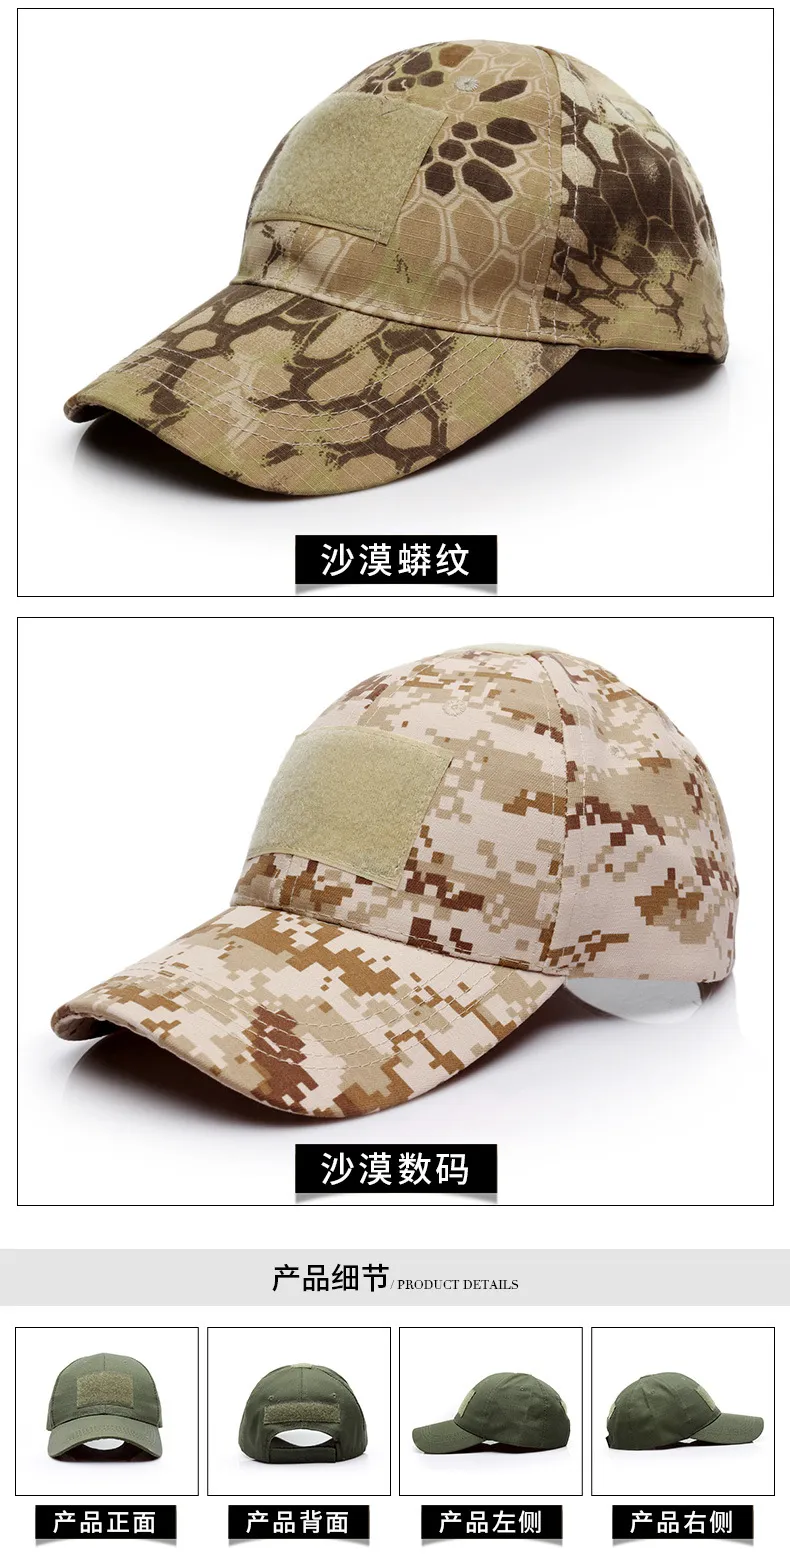 Factory Whole 6 panel Cap Sombreros de béisbol de camuflaje militar en buenas actividades al aire libre248J